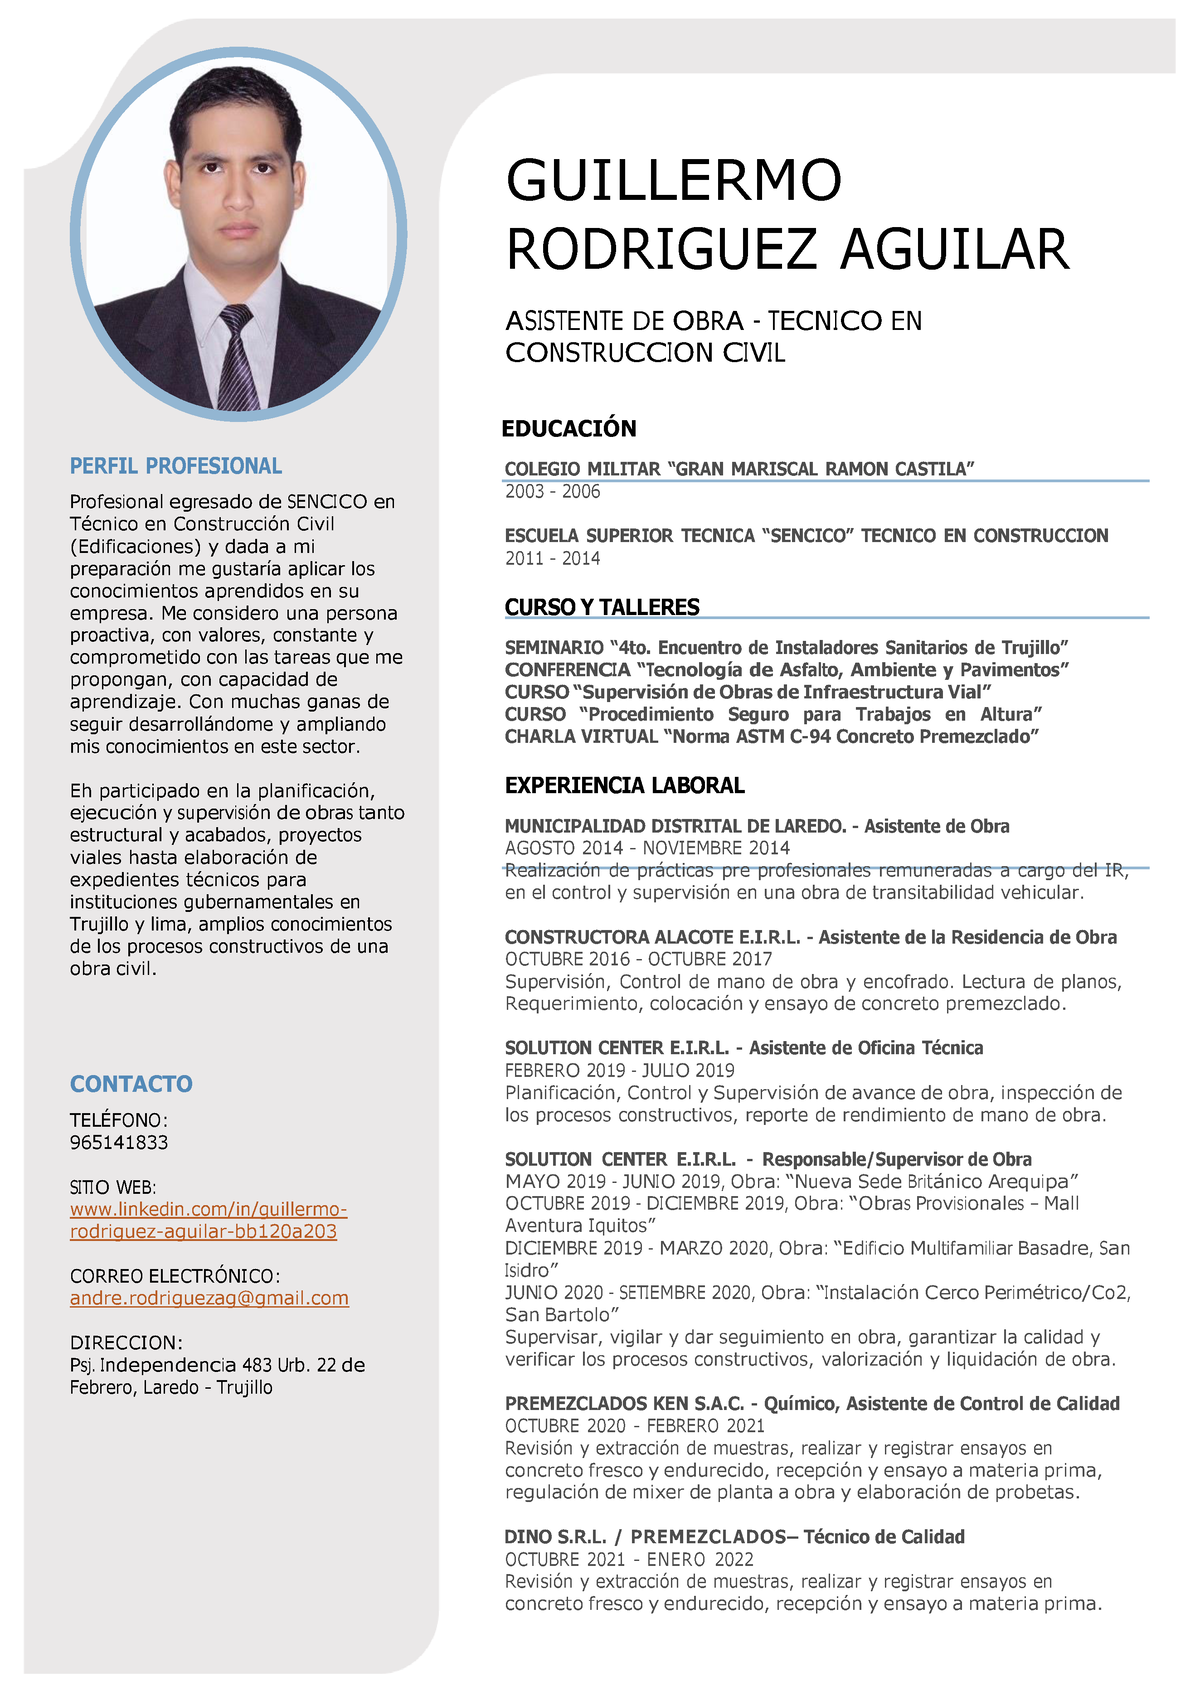 CV PDF - curriculum vitae - GUILLERMO RODRIGUEZ AGUILAR ASISTENTE DE OBRA -  TECNICO EN CONSTRUCCION - Studocu